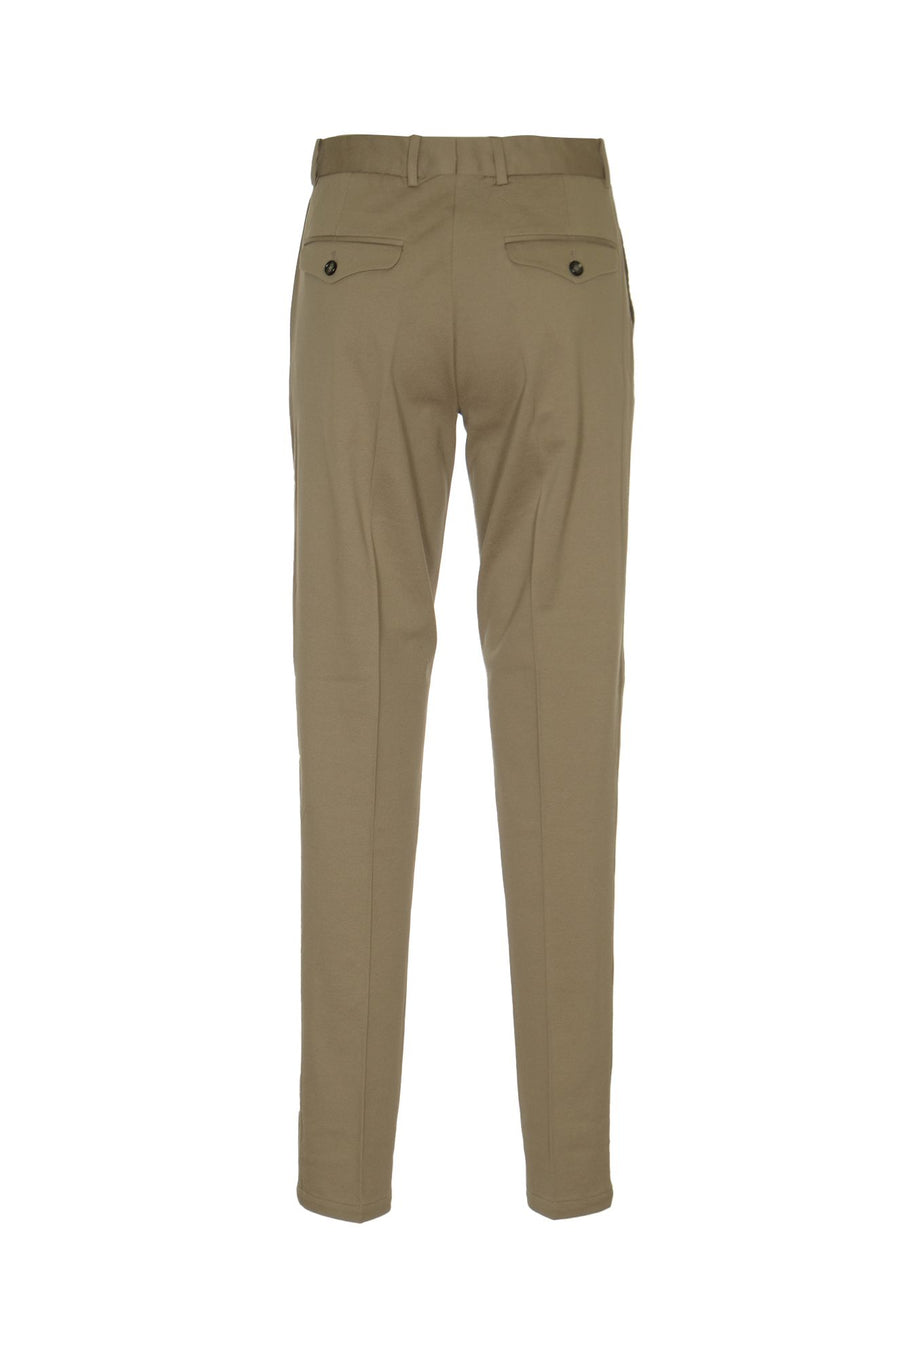 SU4-4243 Pantalone Chino Jersey Castoro Man